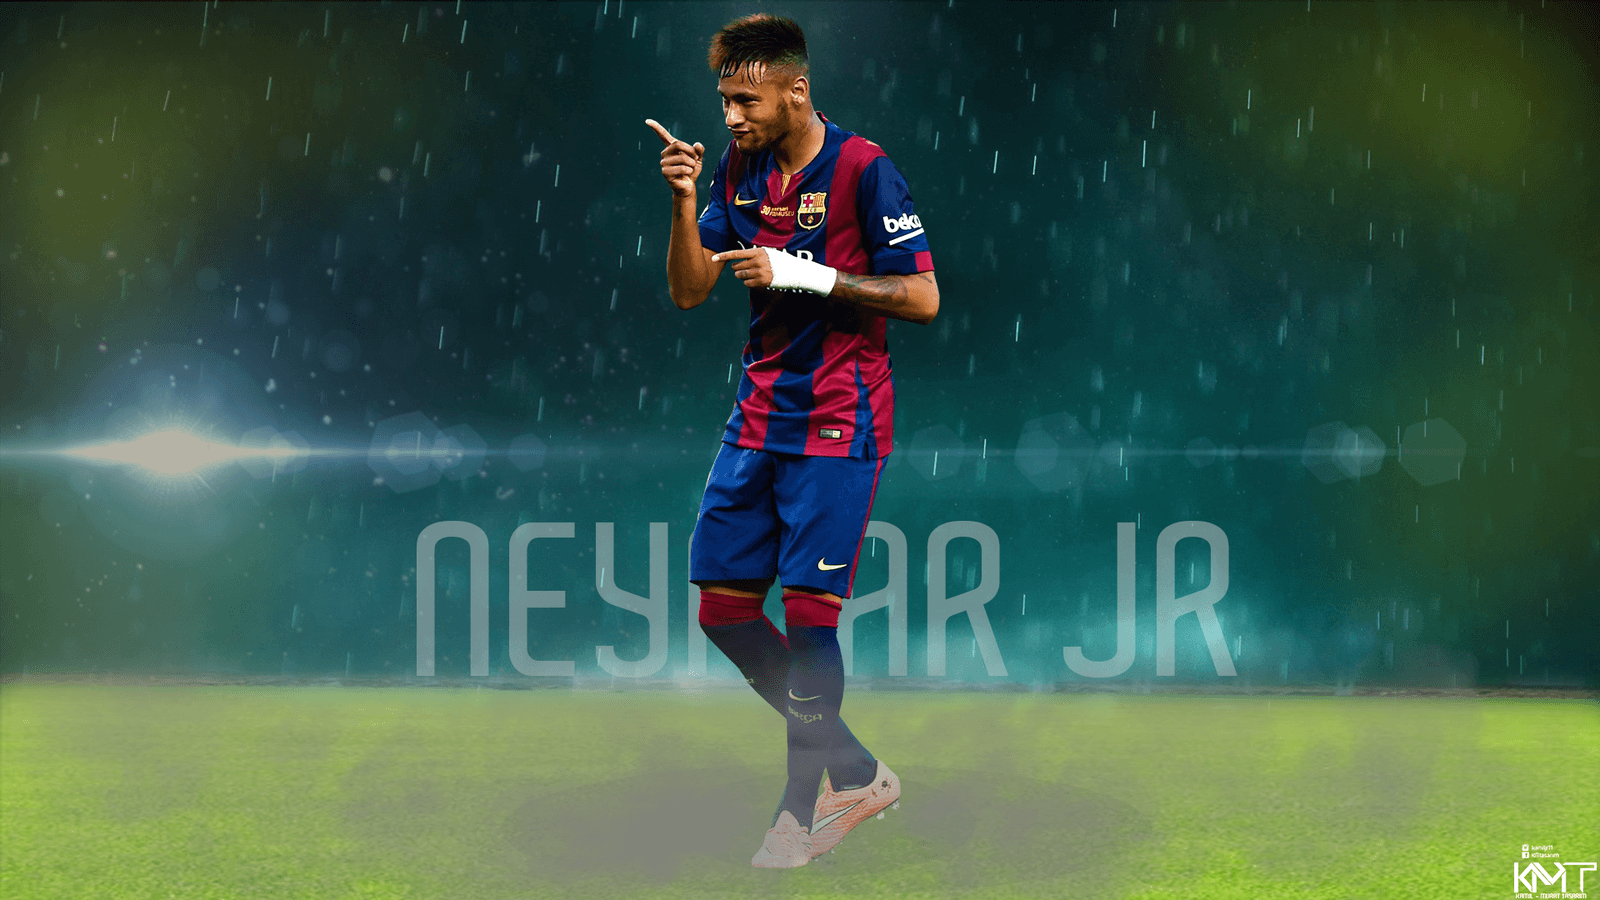 Awesome Neymar Wallpaper HD